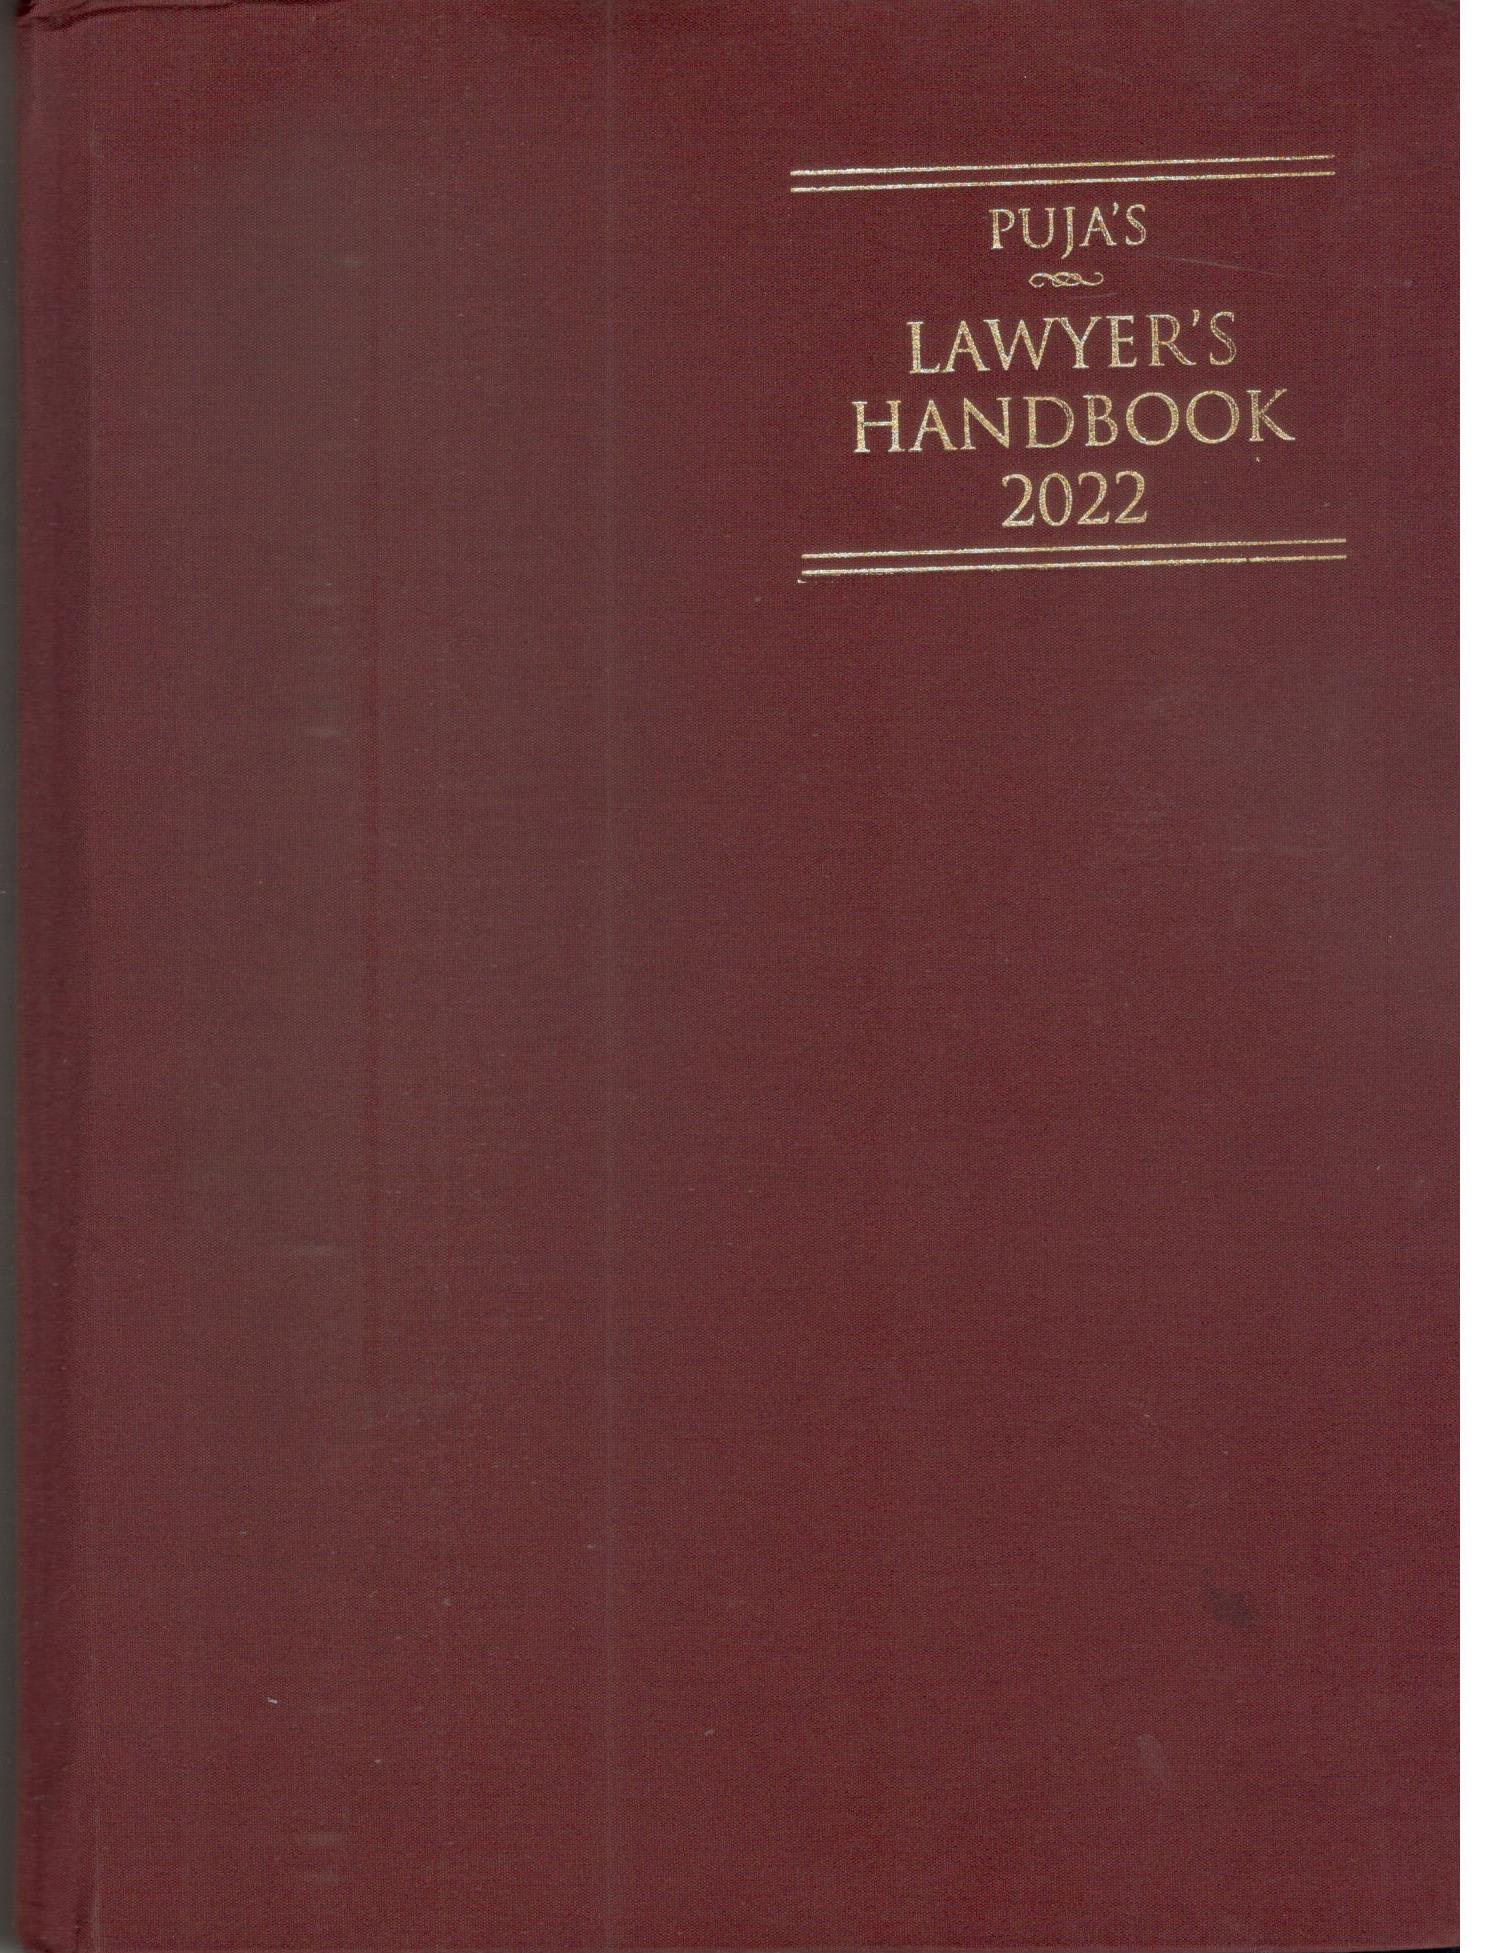  Buy Puja’s Lawyer’s Handbook 2022 - Maroon Big Size Hardbound